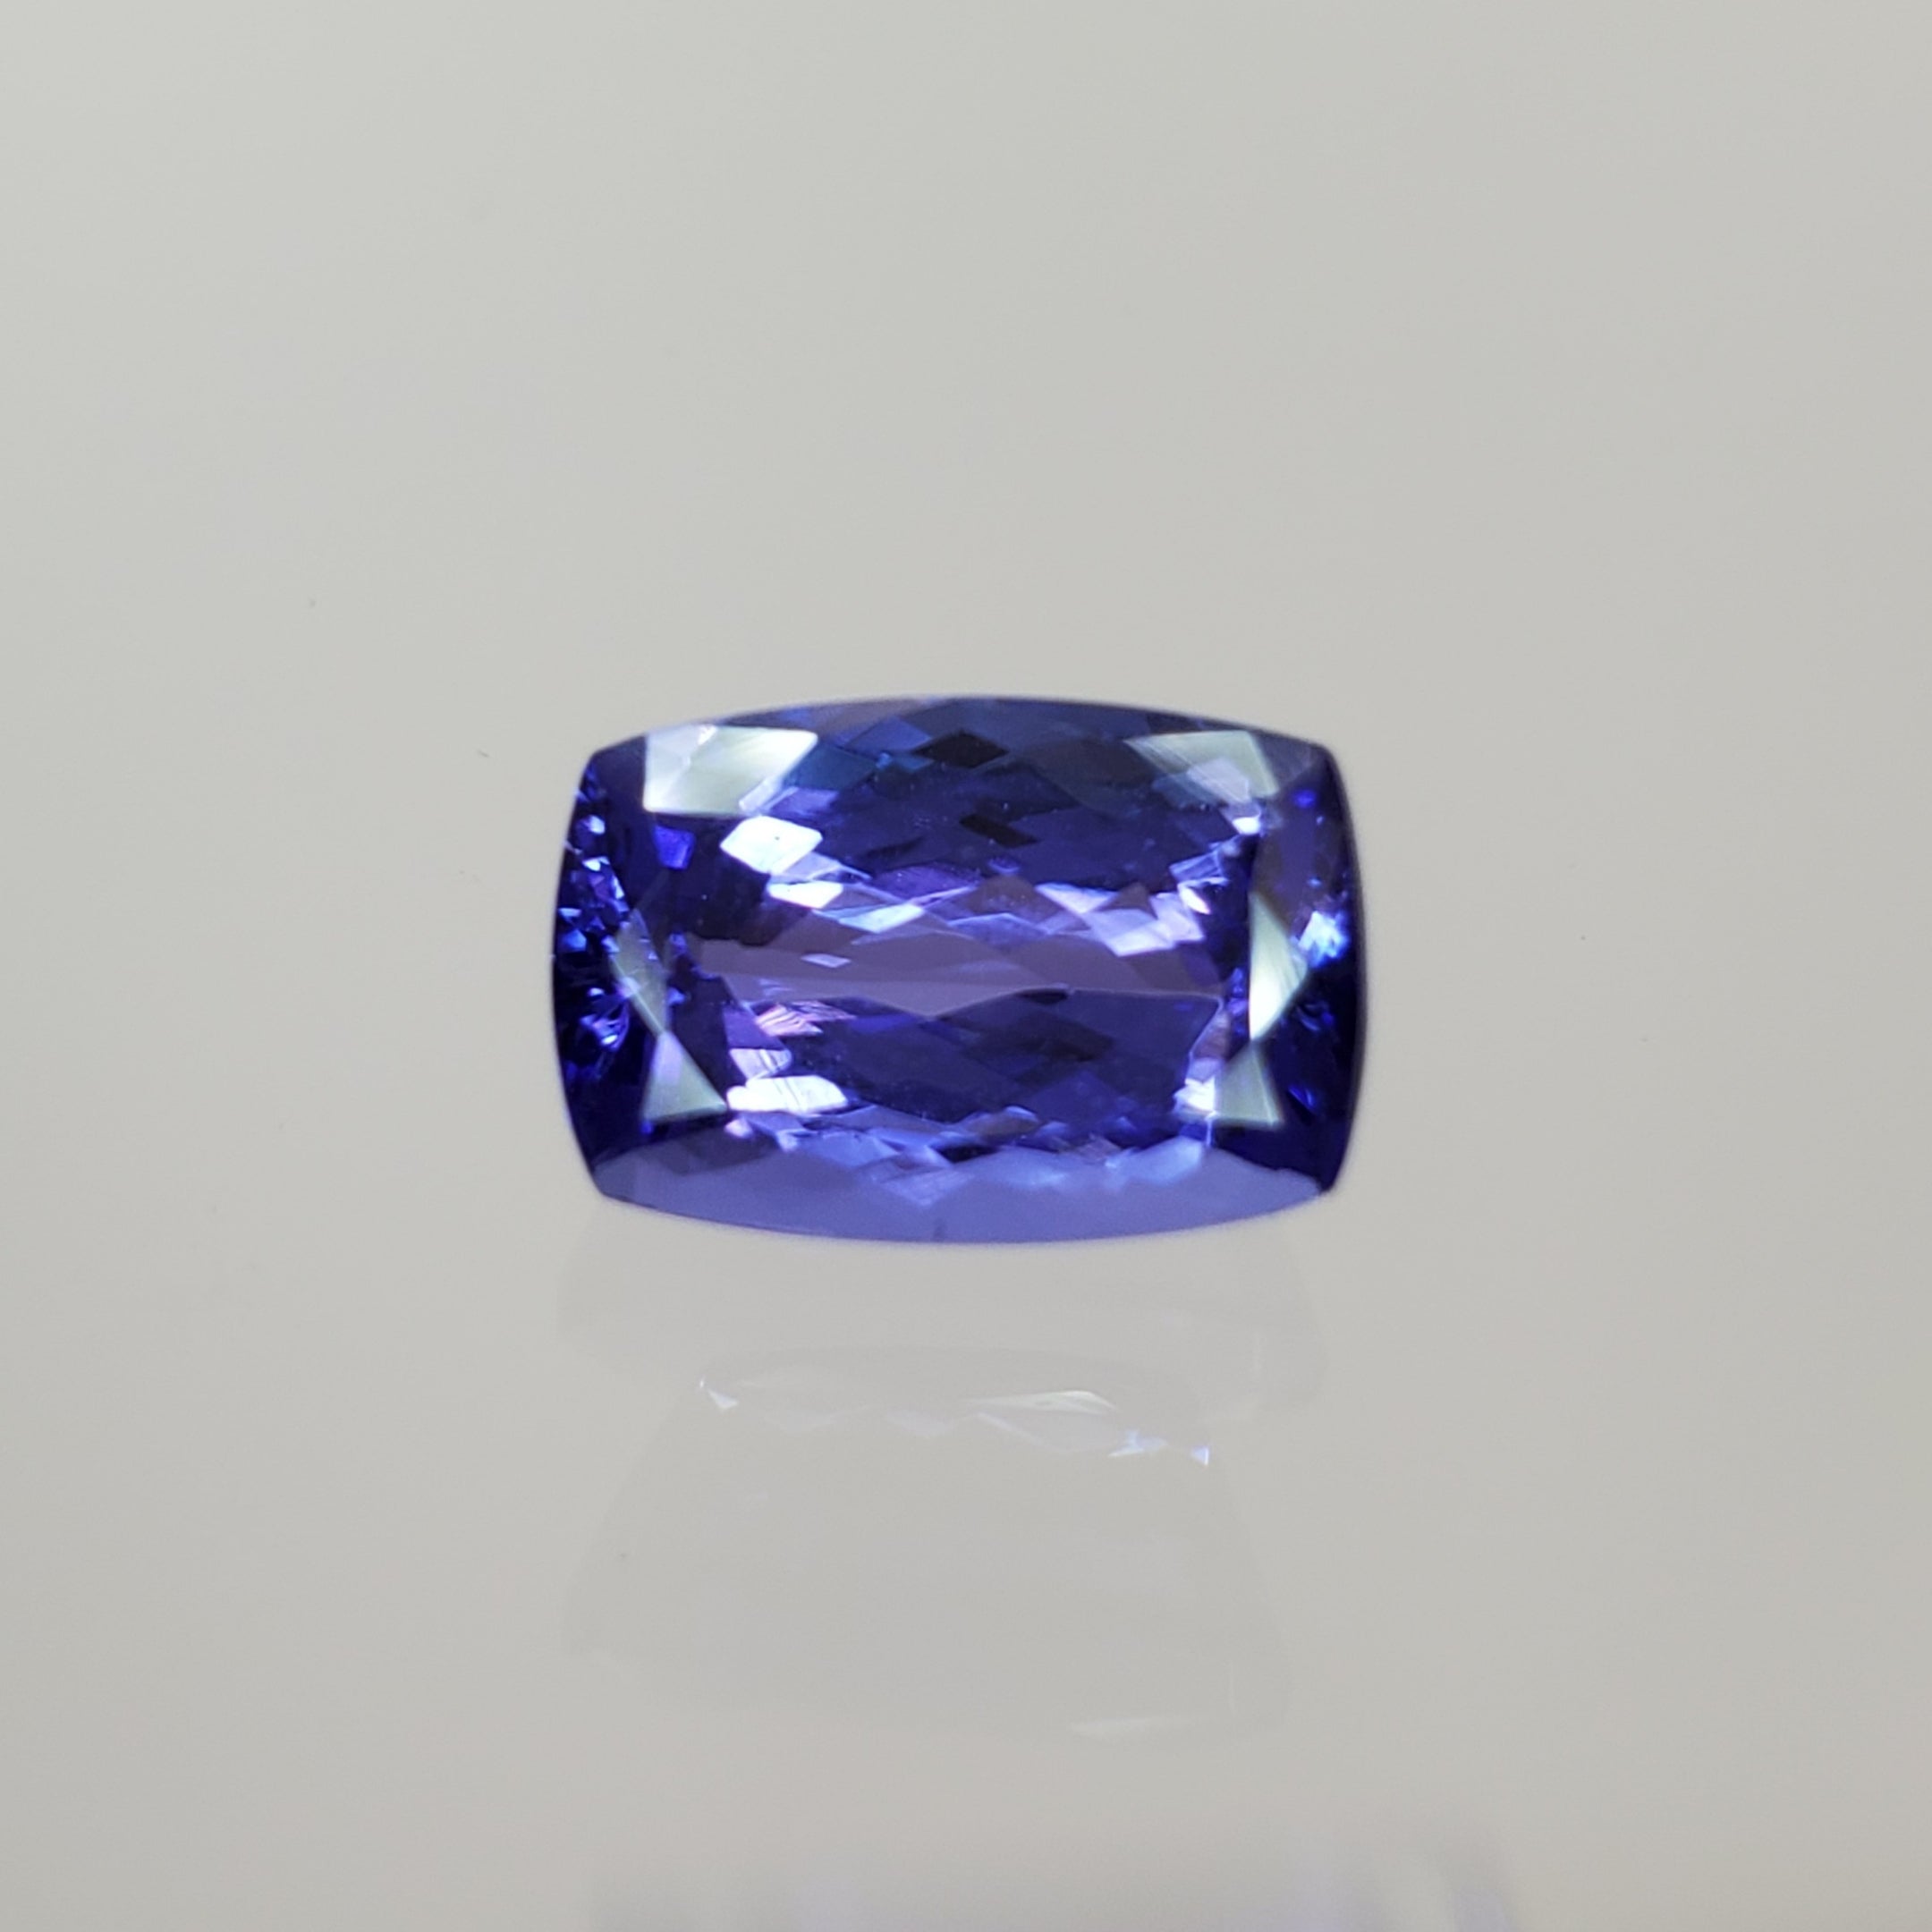 3.83 carat cushion-cut violet blue tanzanite loose gemstone